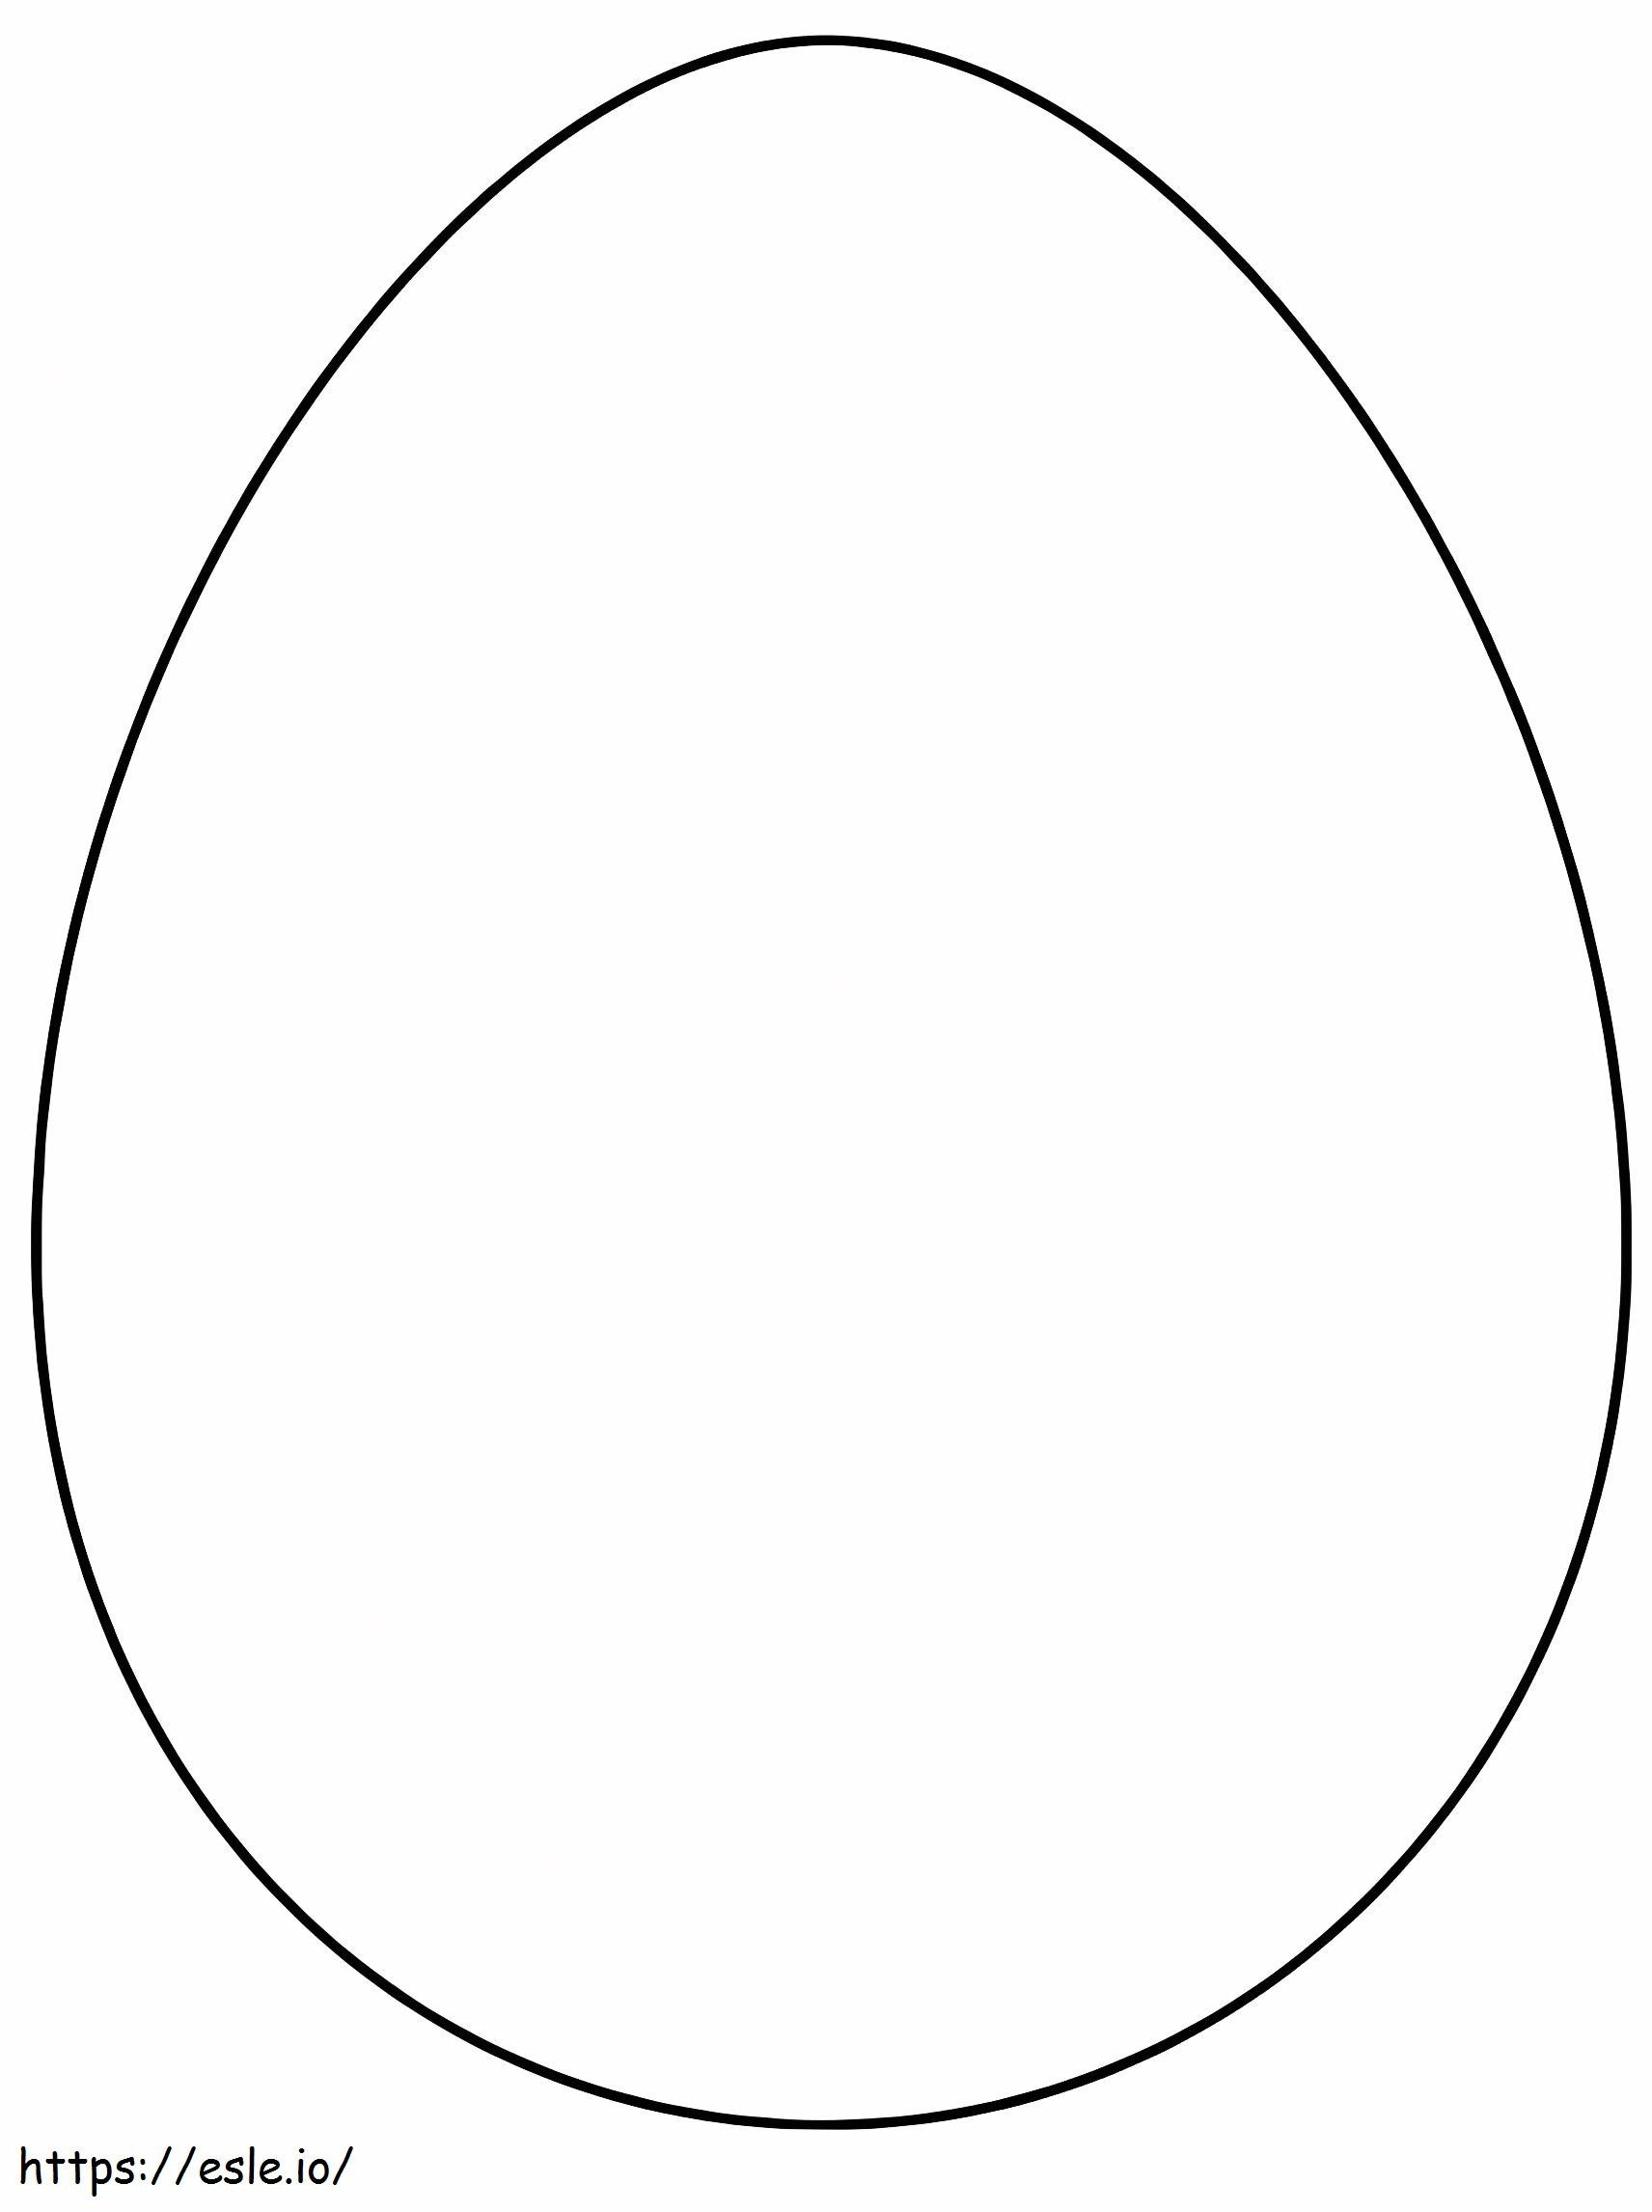 Ou de Paște ușor de colorat